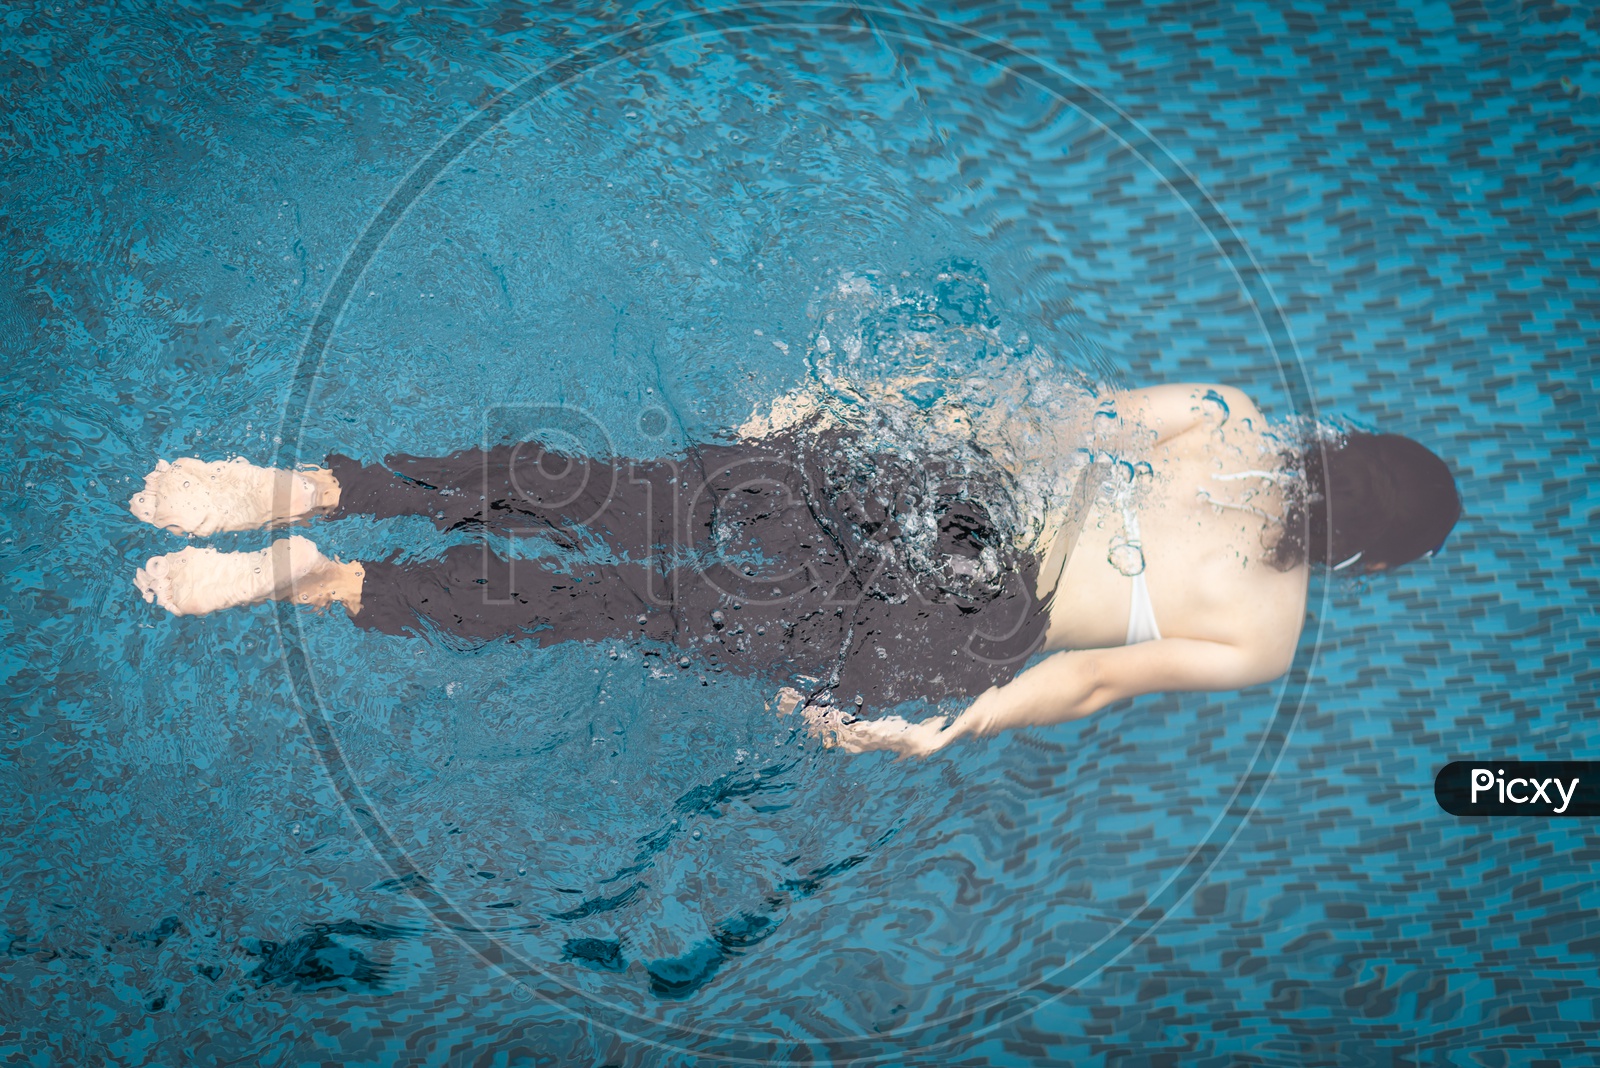 An Asian woman relaxing in swimming pool